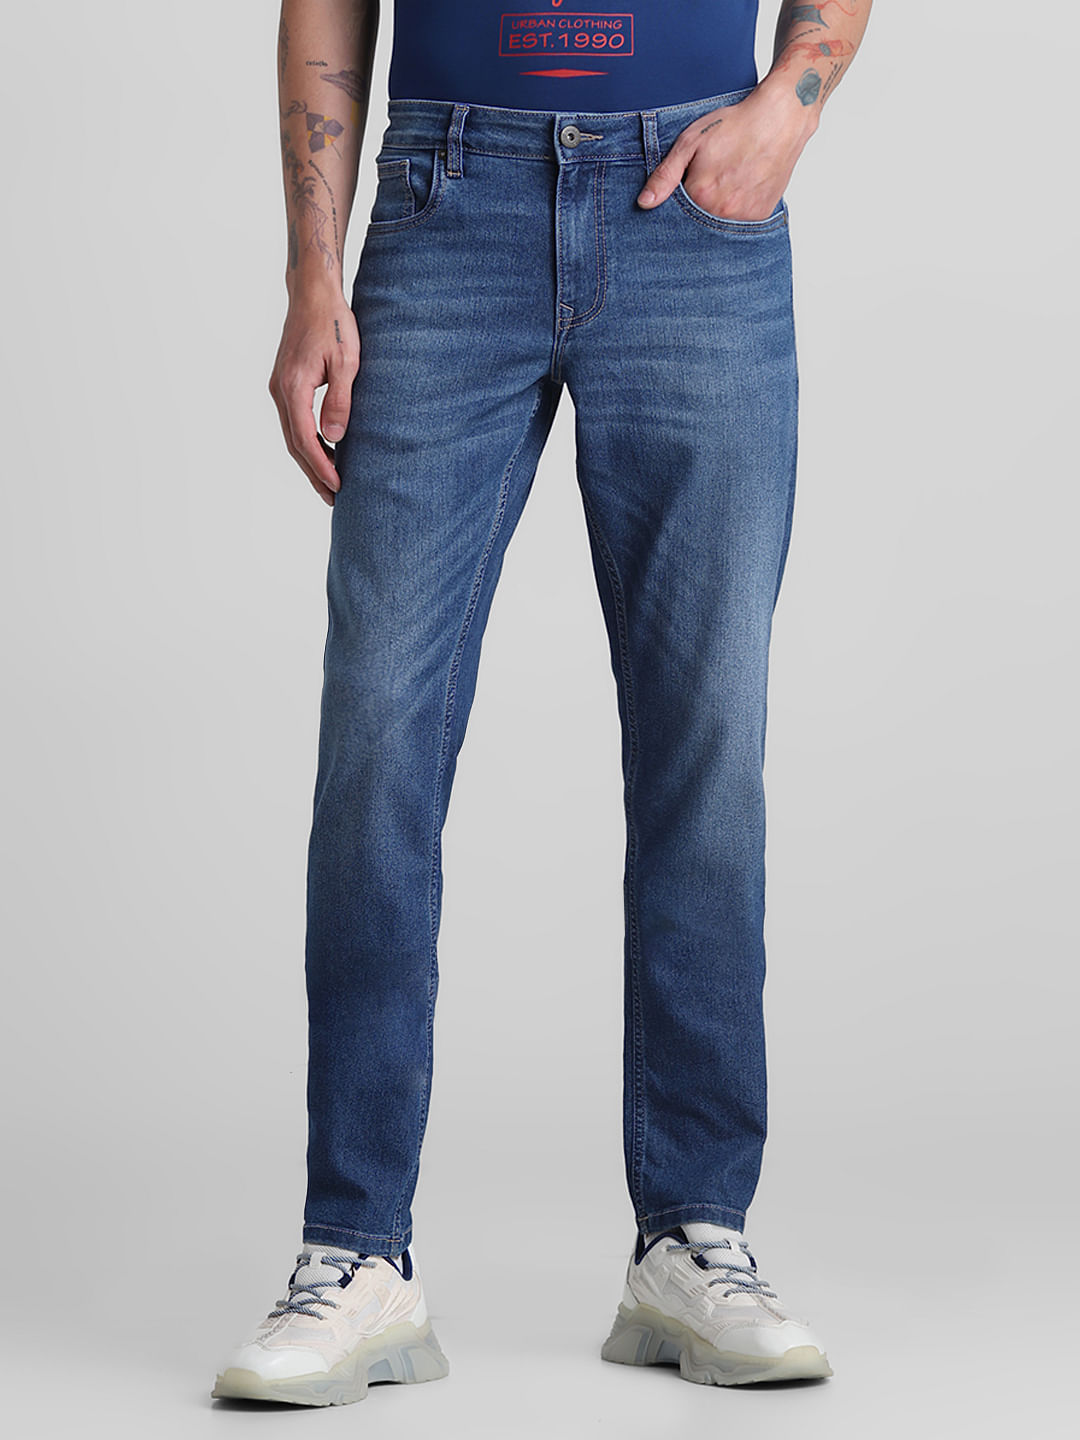 Casual Wear Skin Fit Men Skinny Denim Jeans, Waist Size: 28-36 at Rs  350/piece in Bengaluru